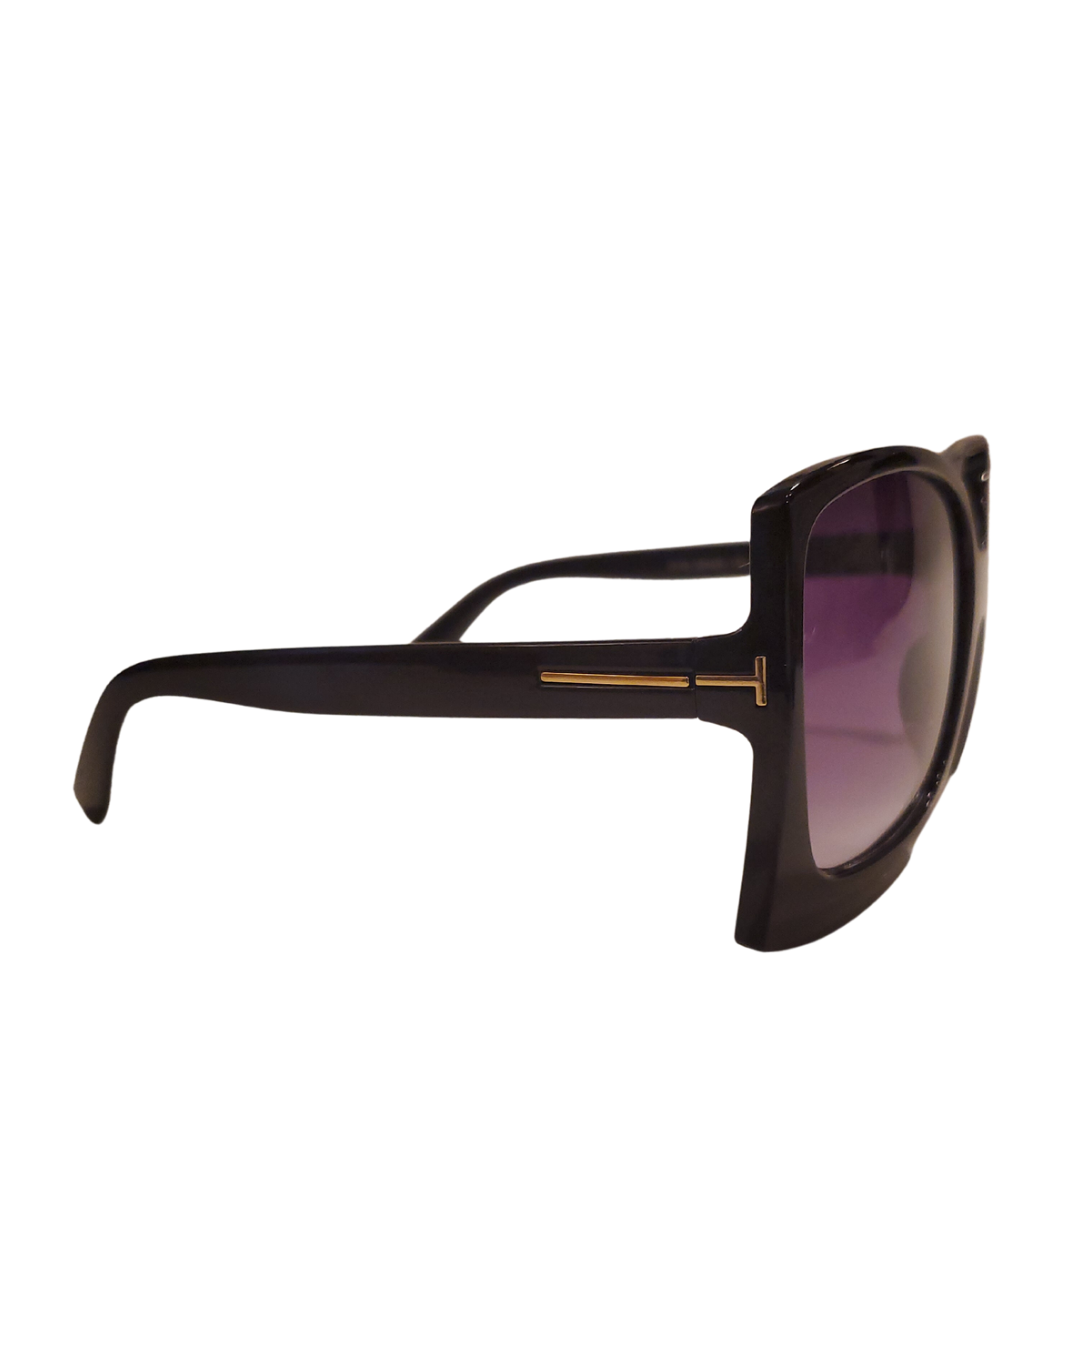 image of black sunglasses.